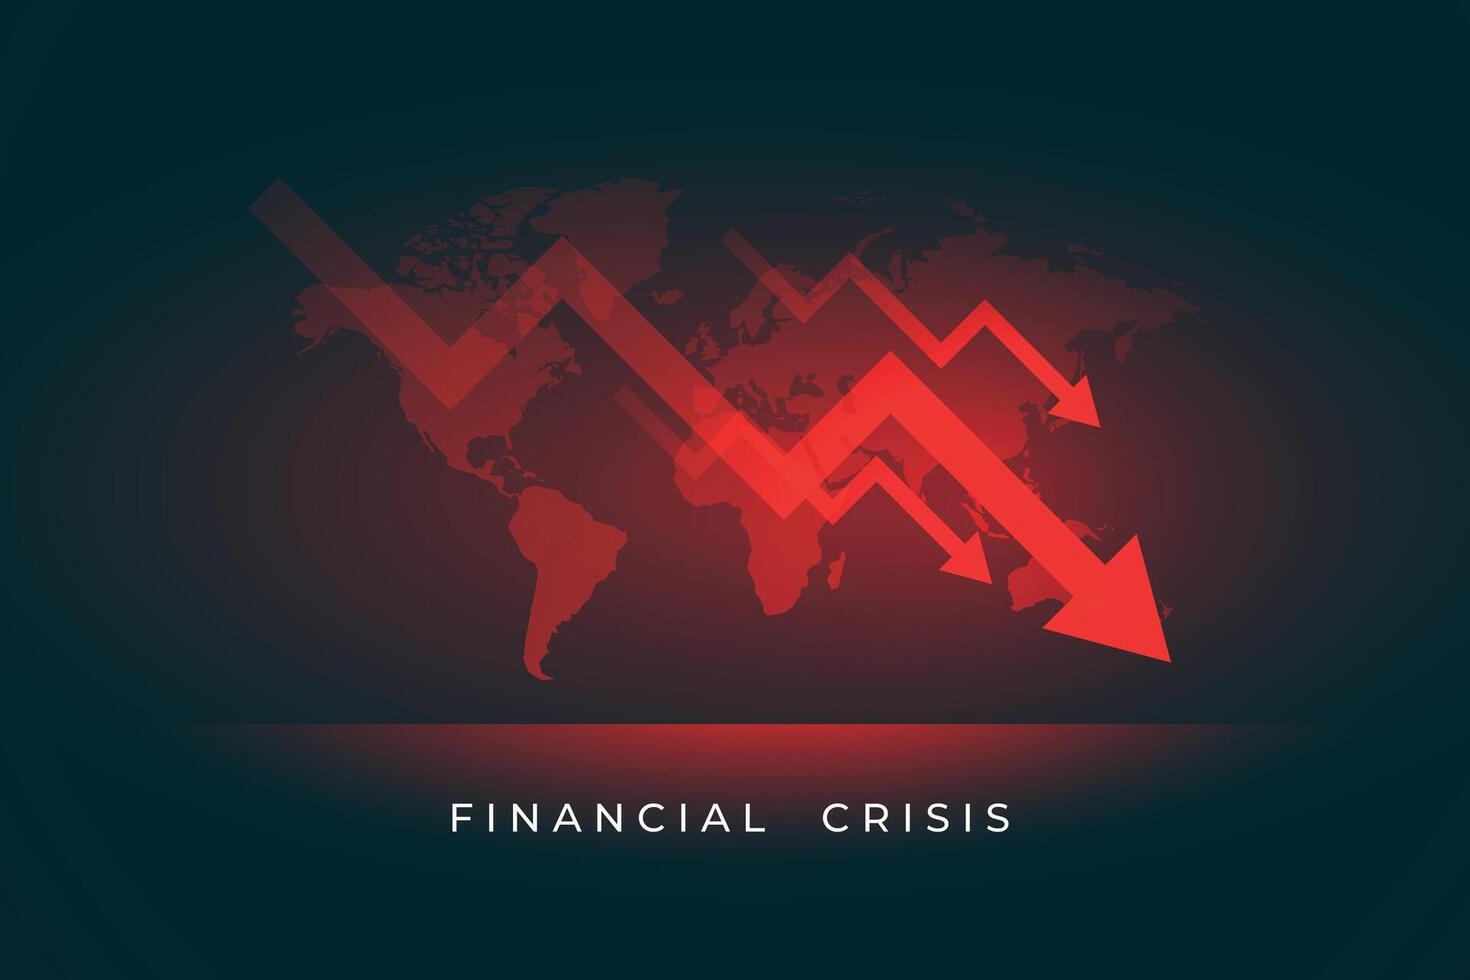 economia estoque mercado queda do finacial crise vetor